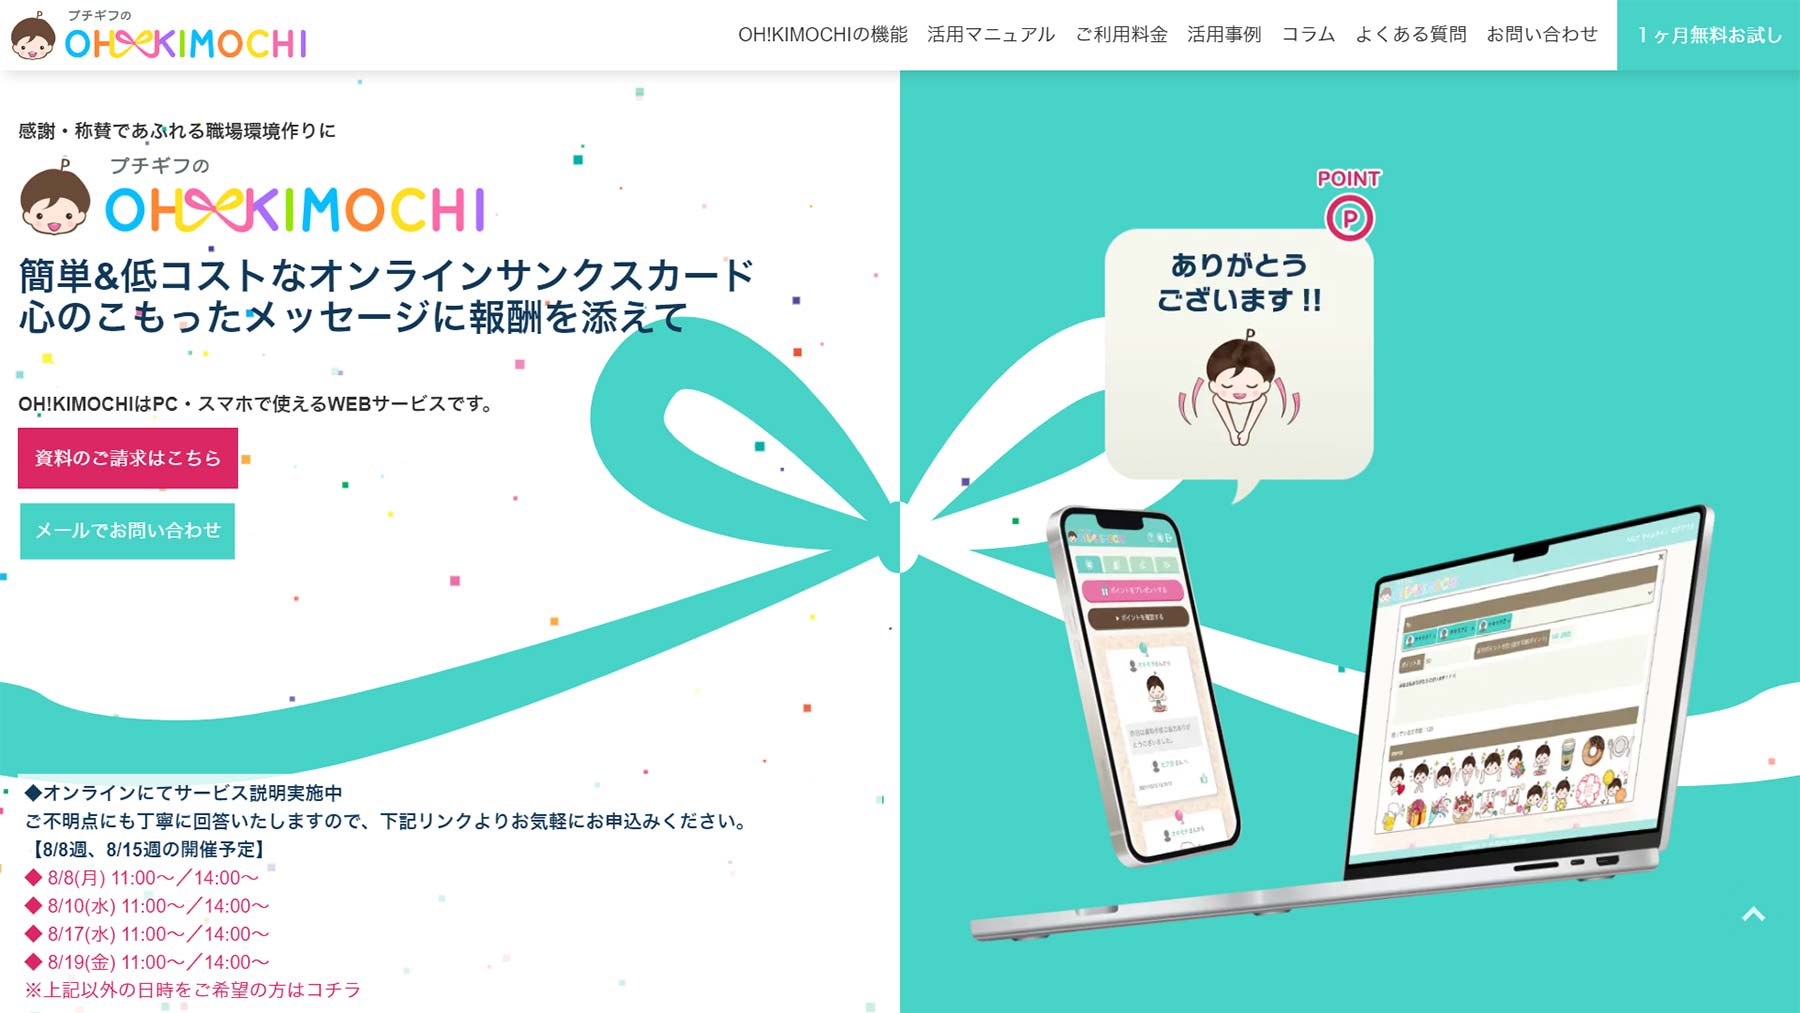 OH!KIMOCHI公式Webサイト